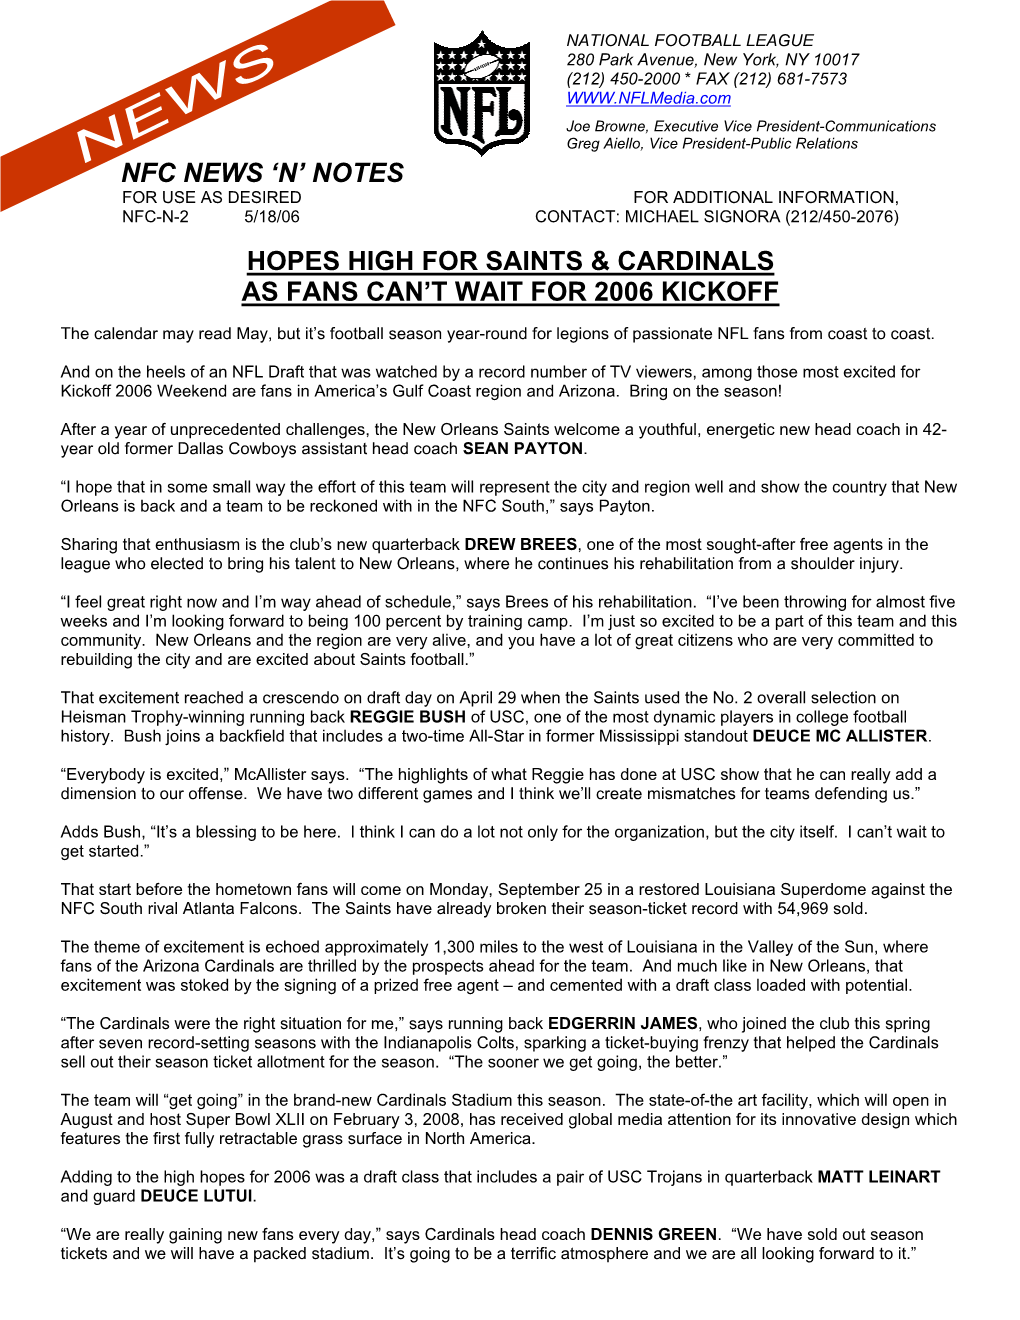 Nfc News 'N' Notes Hopes High for Saints & Cardinals